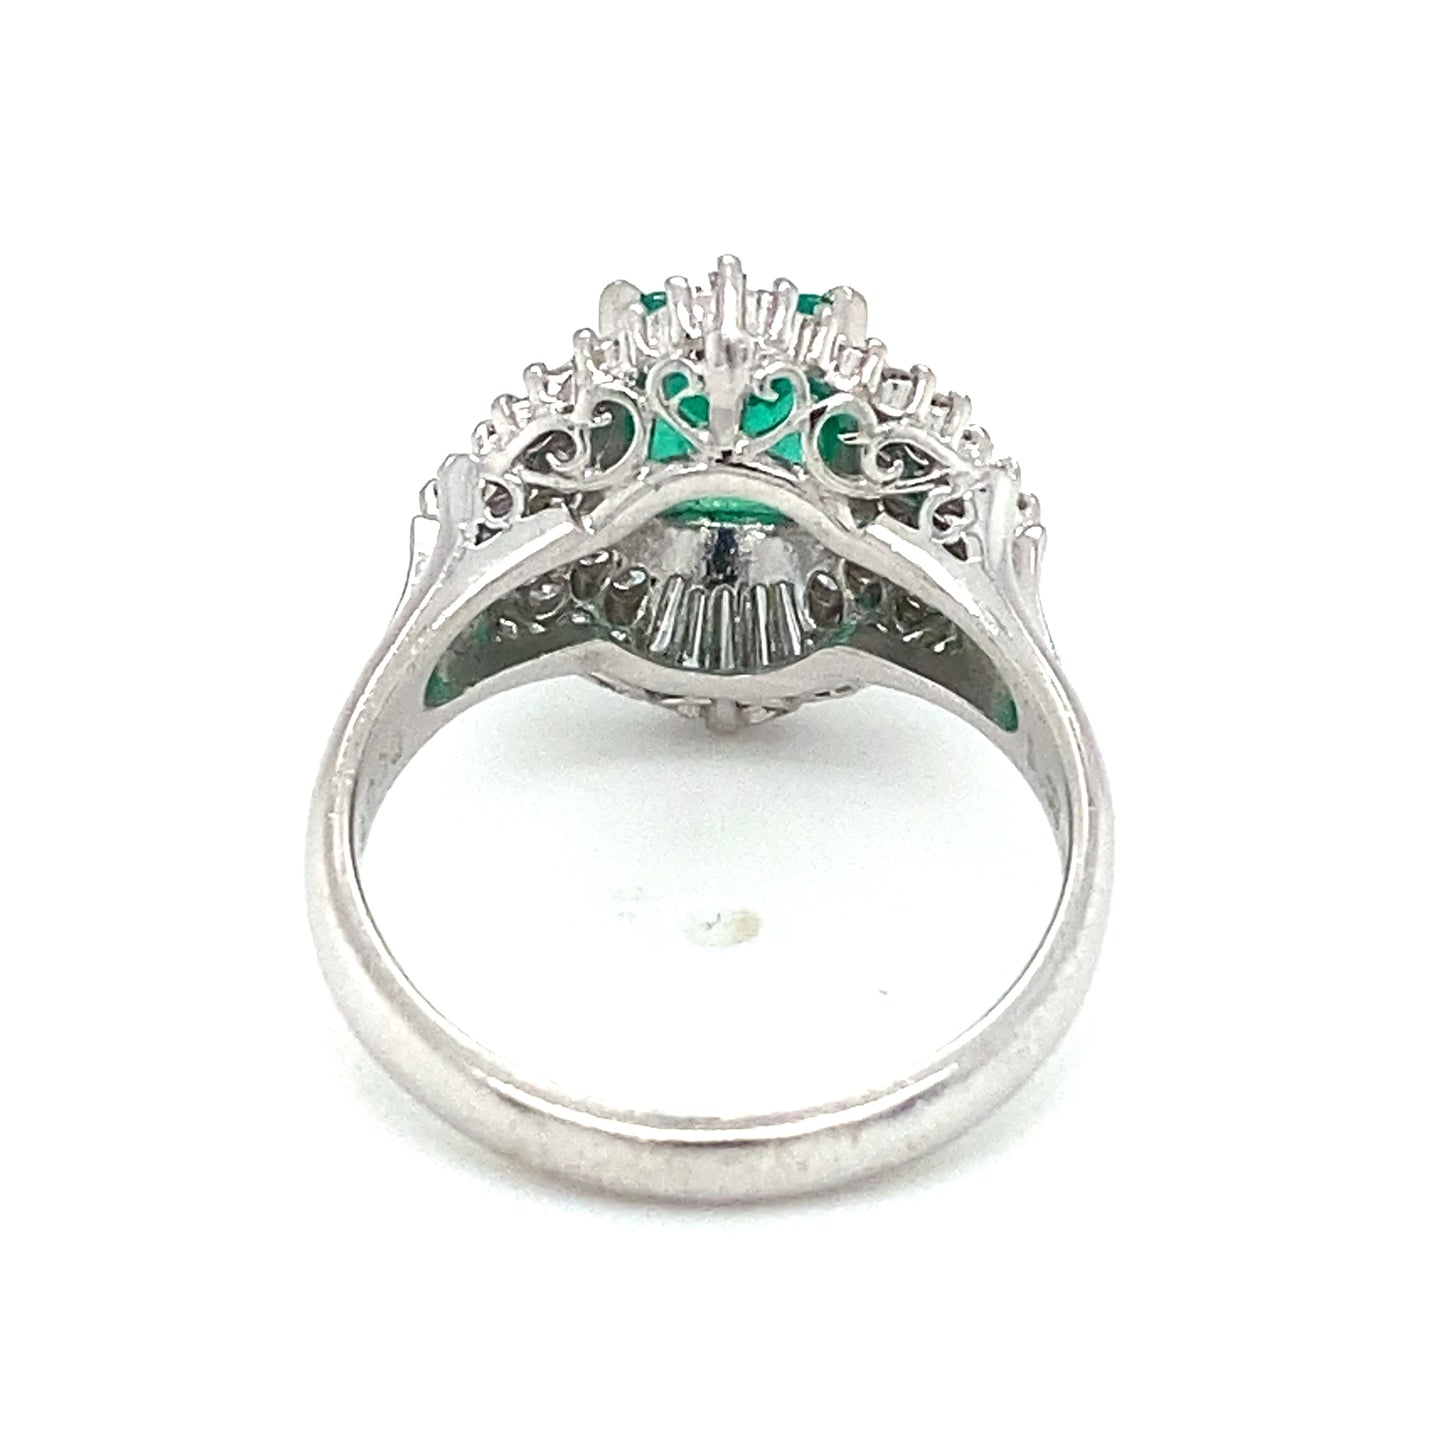 Circa 2000s 1.02ct Emerald and Diamond Cocktail Ring in Platinum